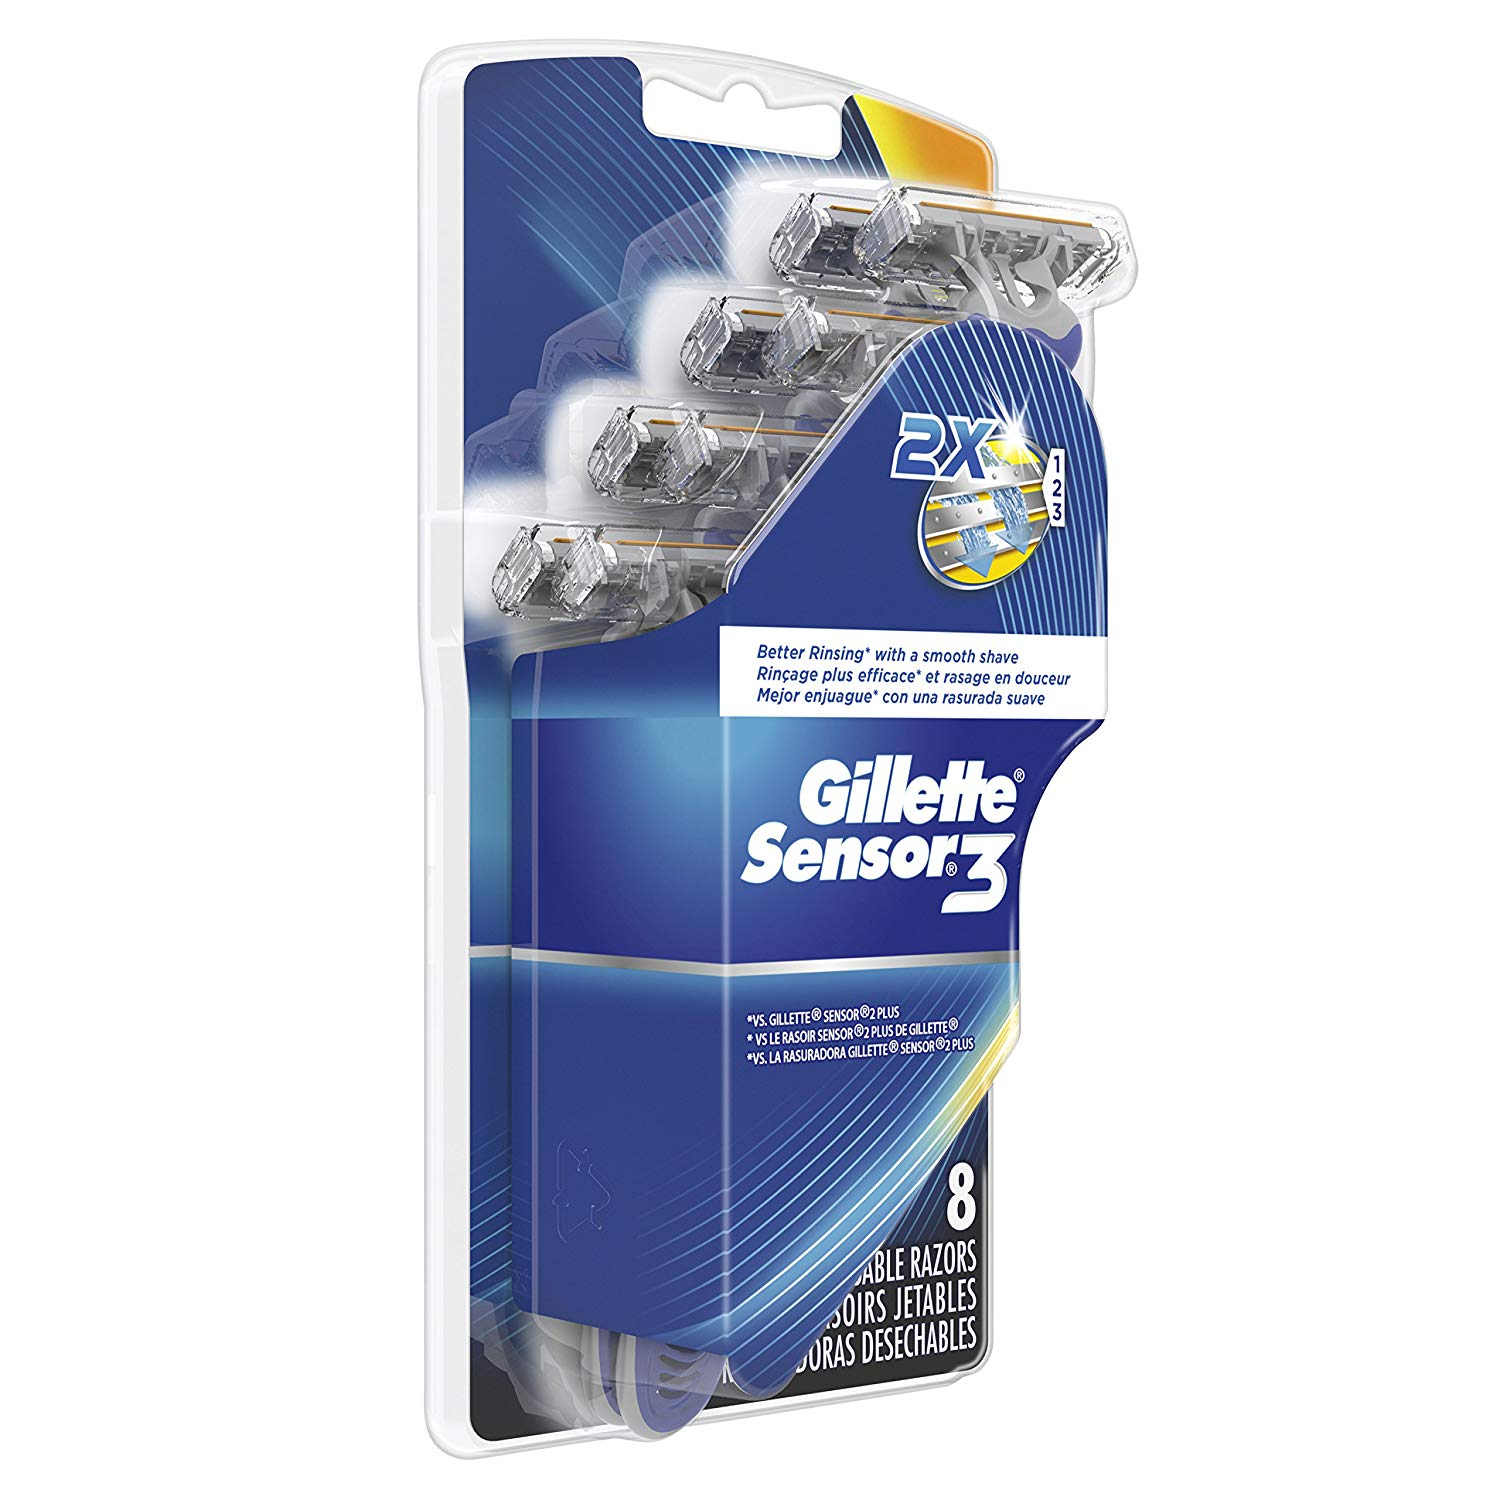 Gillette Sensor3 Men’s Disposable Razor, 8 Count Only $5.54 Shipped!